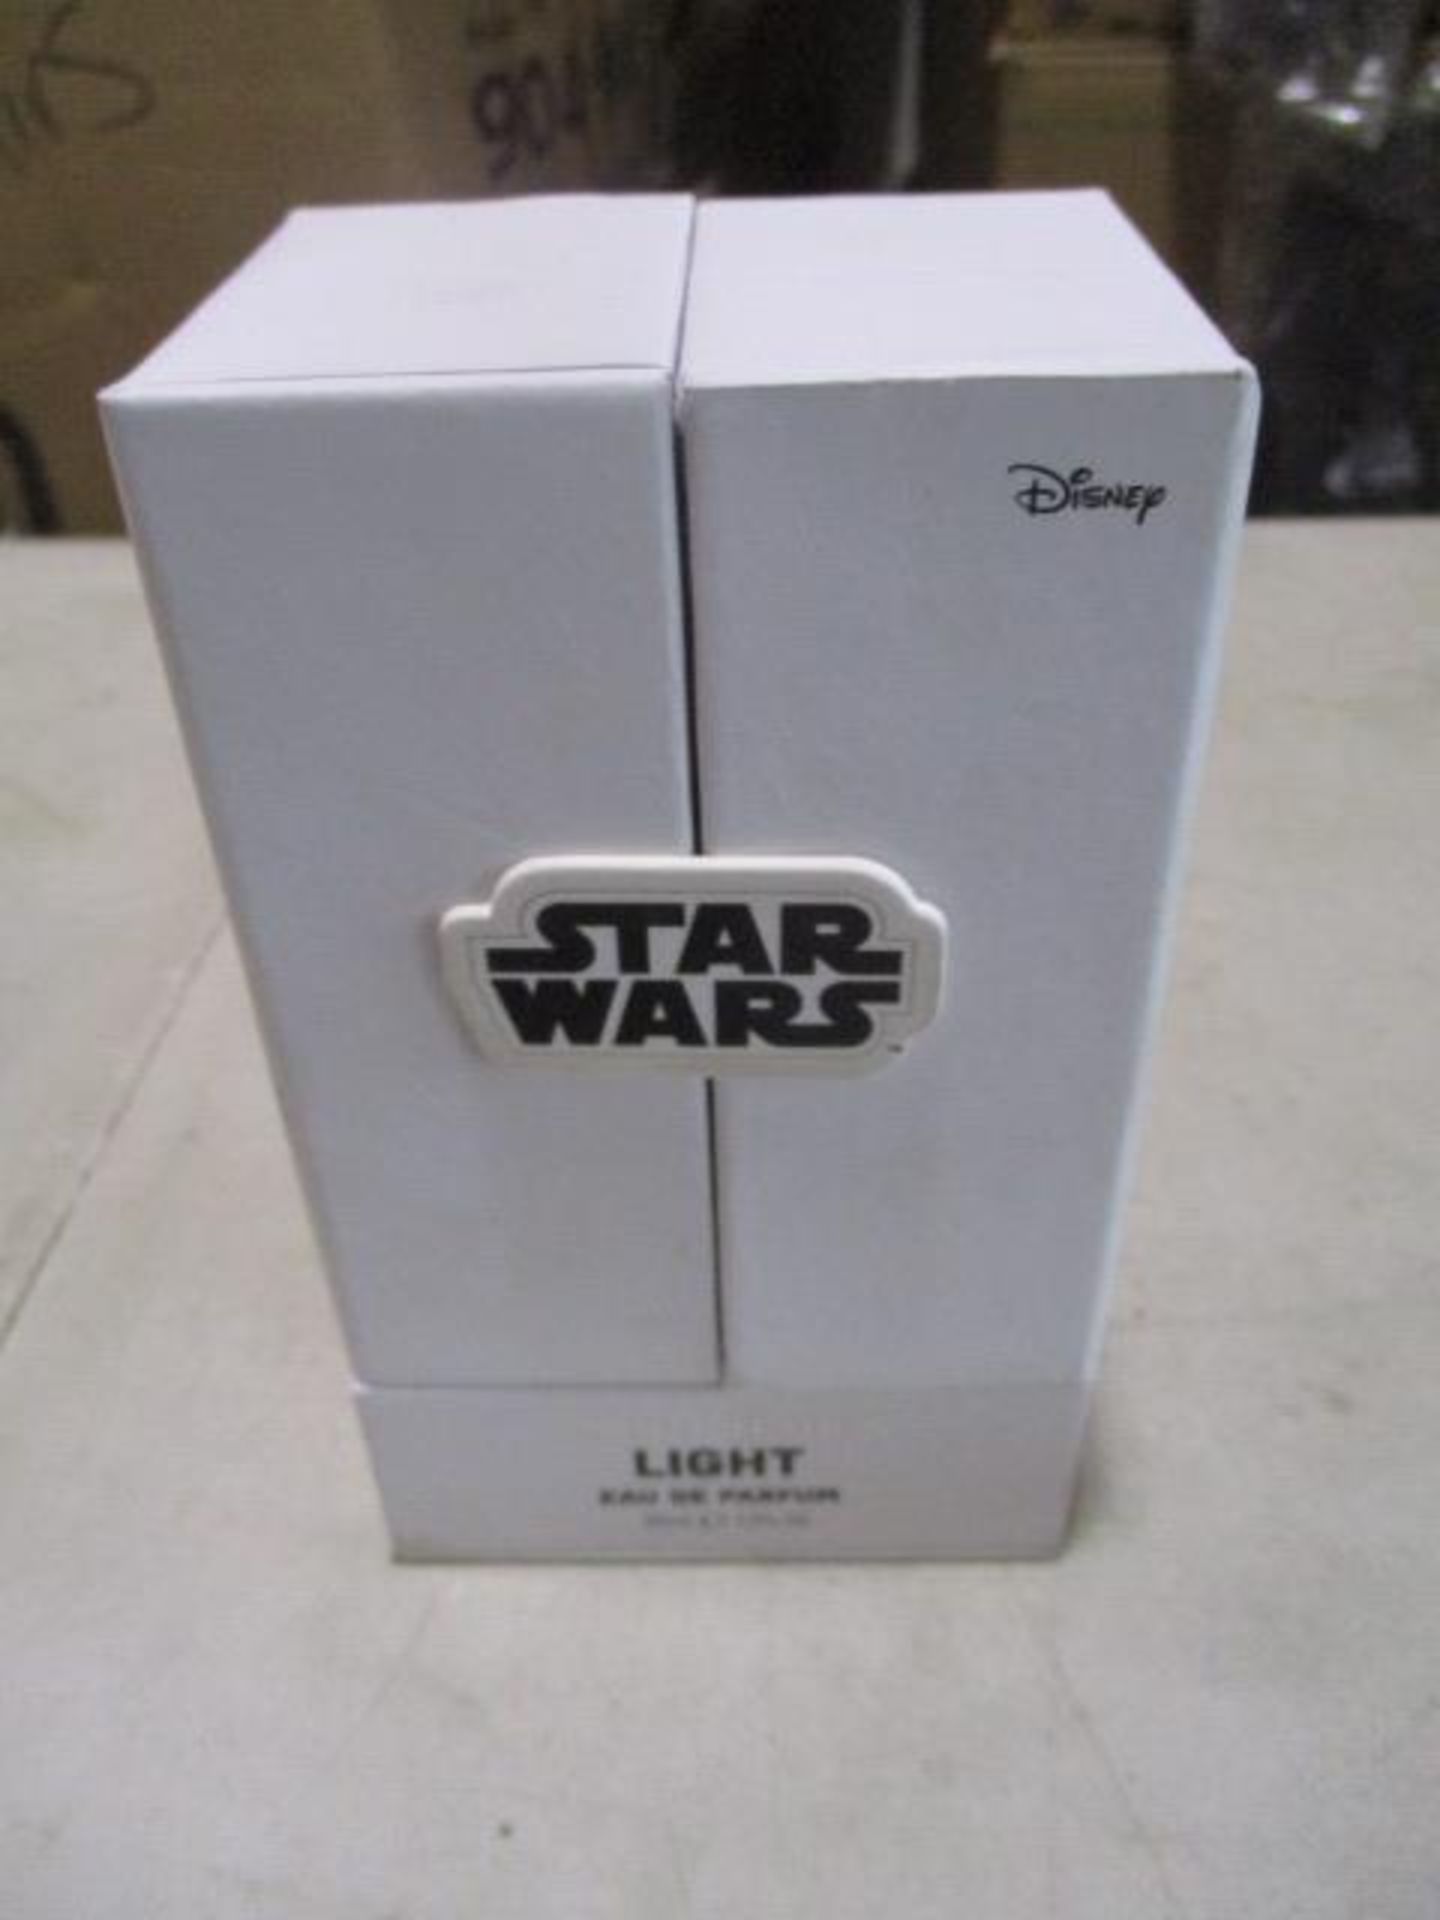 100pcs in lot Brand new Sealed Star Wars Light Limited Edition Eau de parfum sealed carton rrp £12.